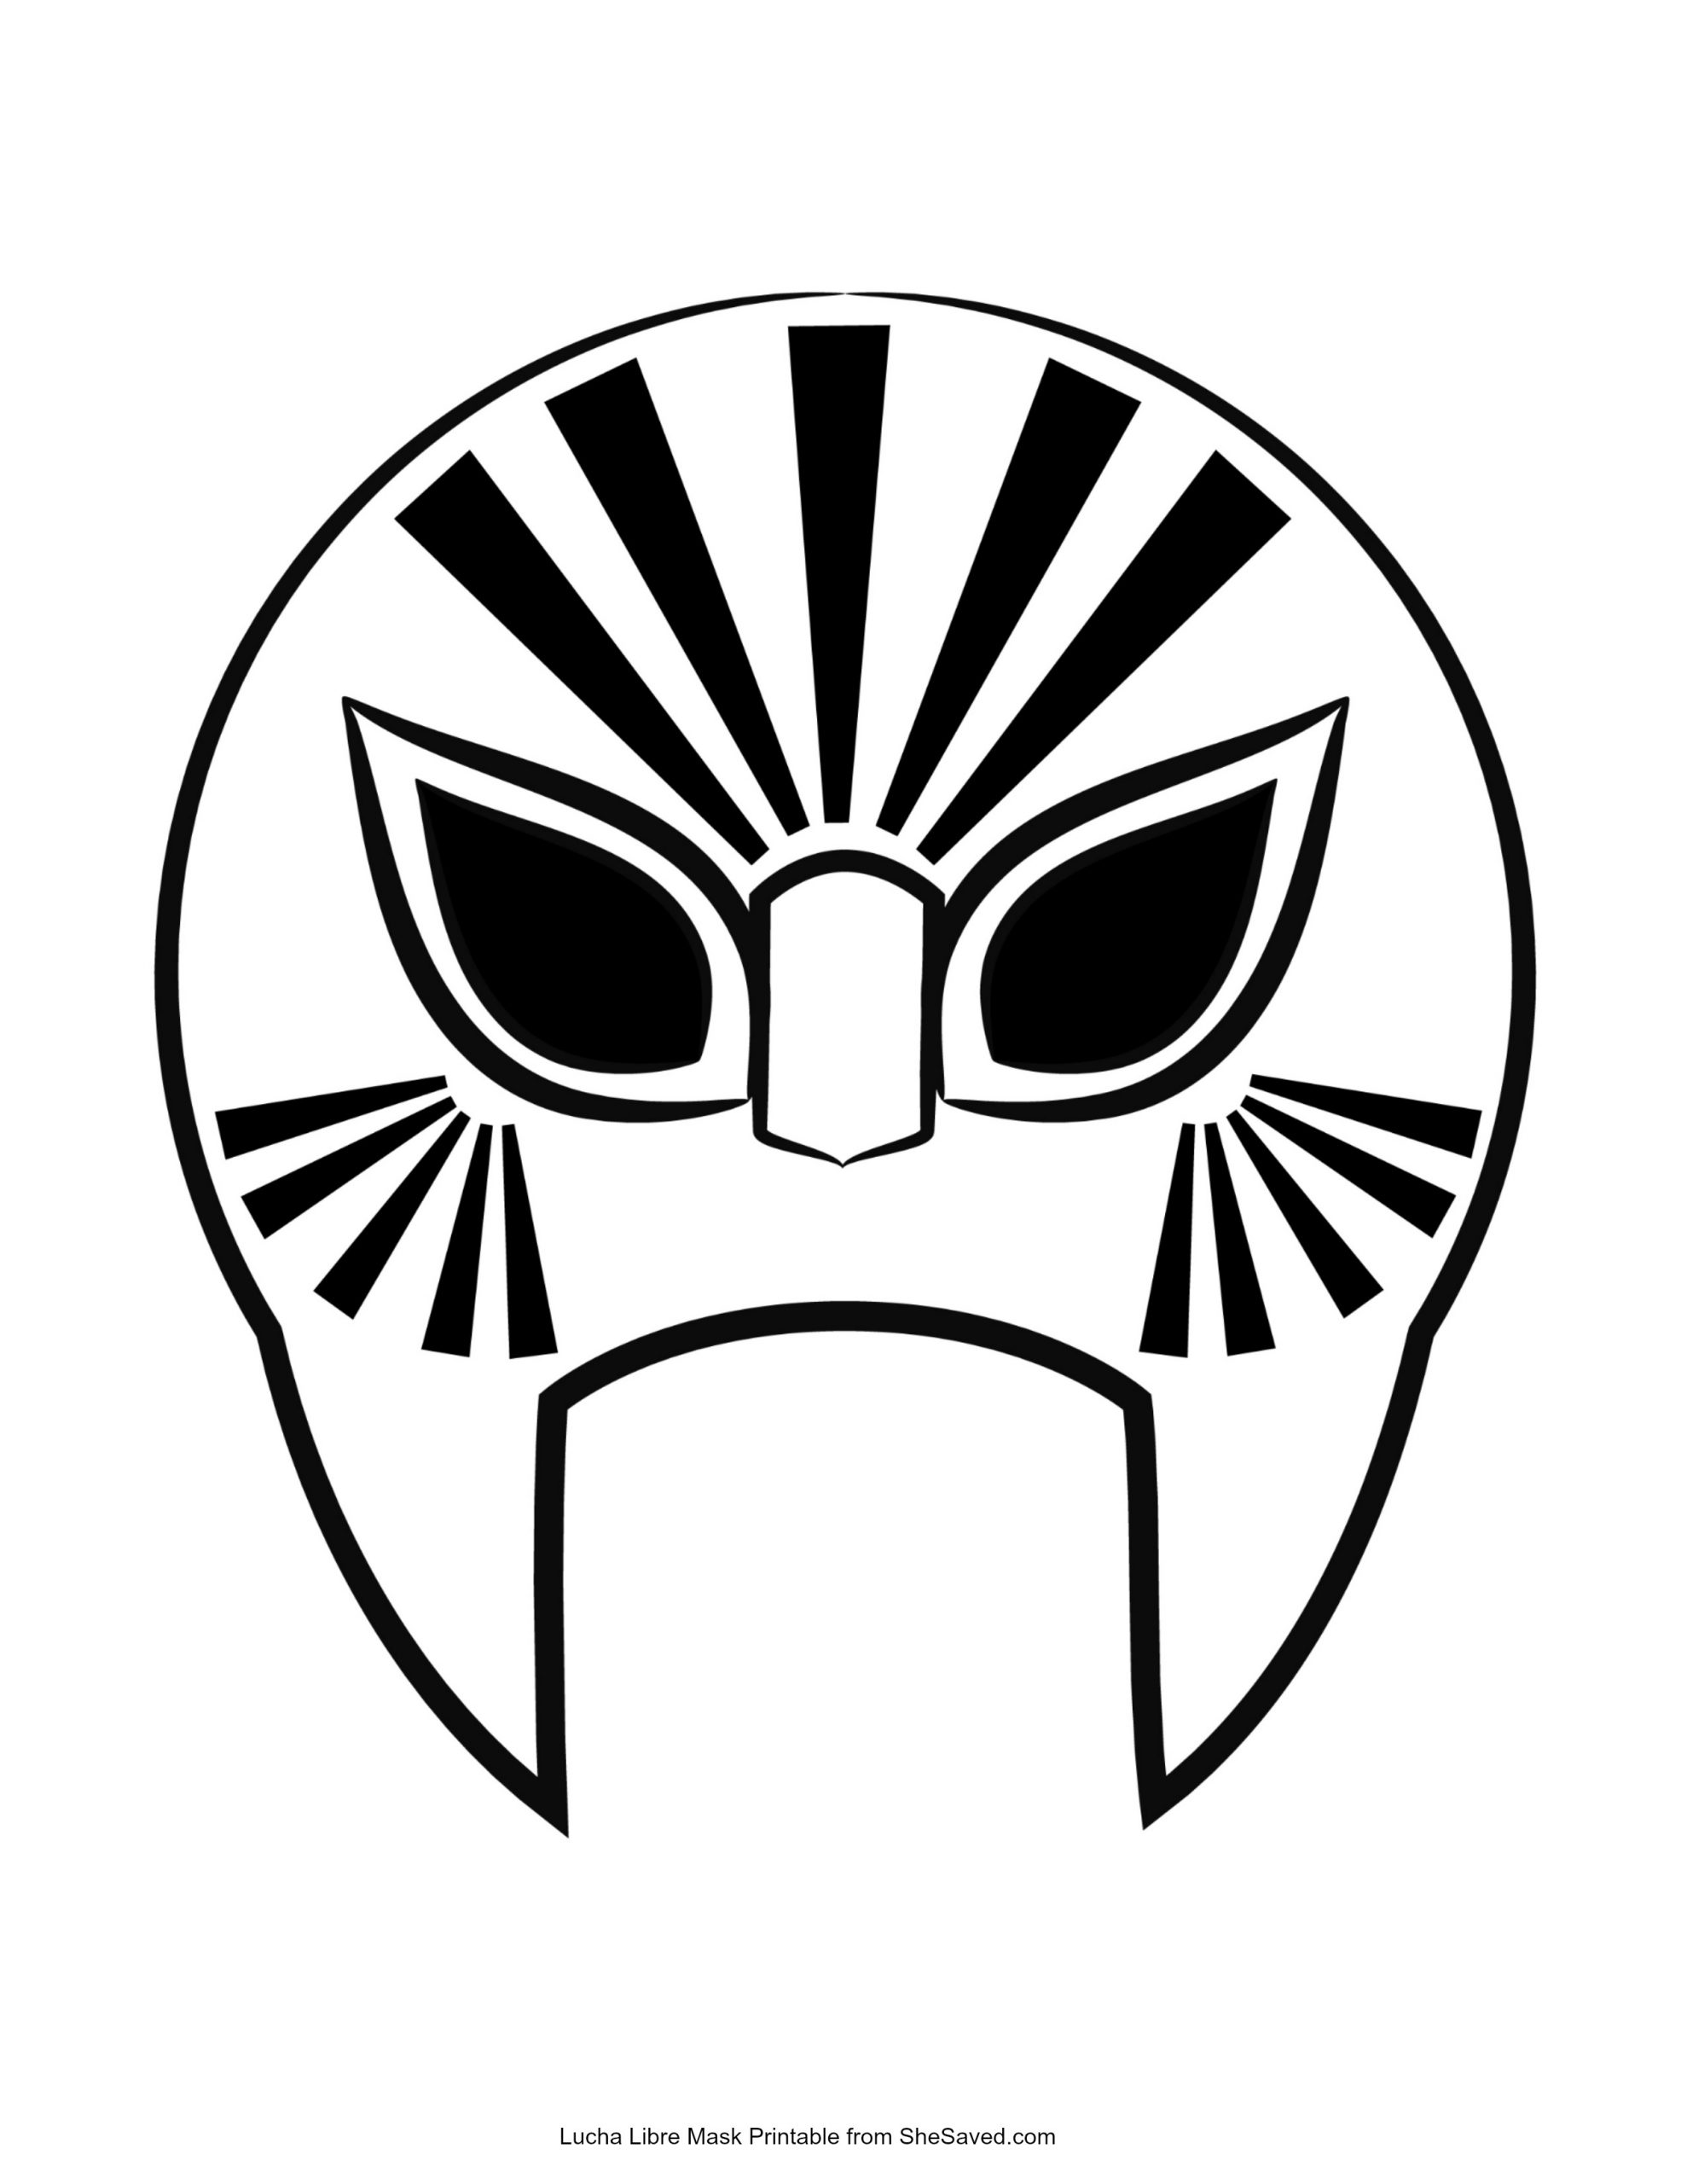 Lucha Libre Mask Free Printable Download - SheSaved®